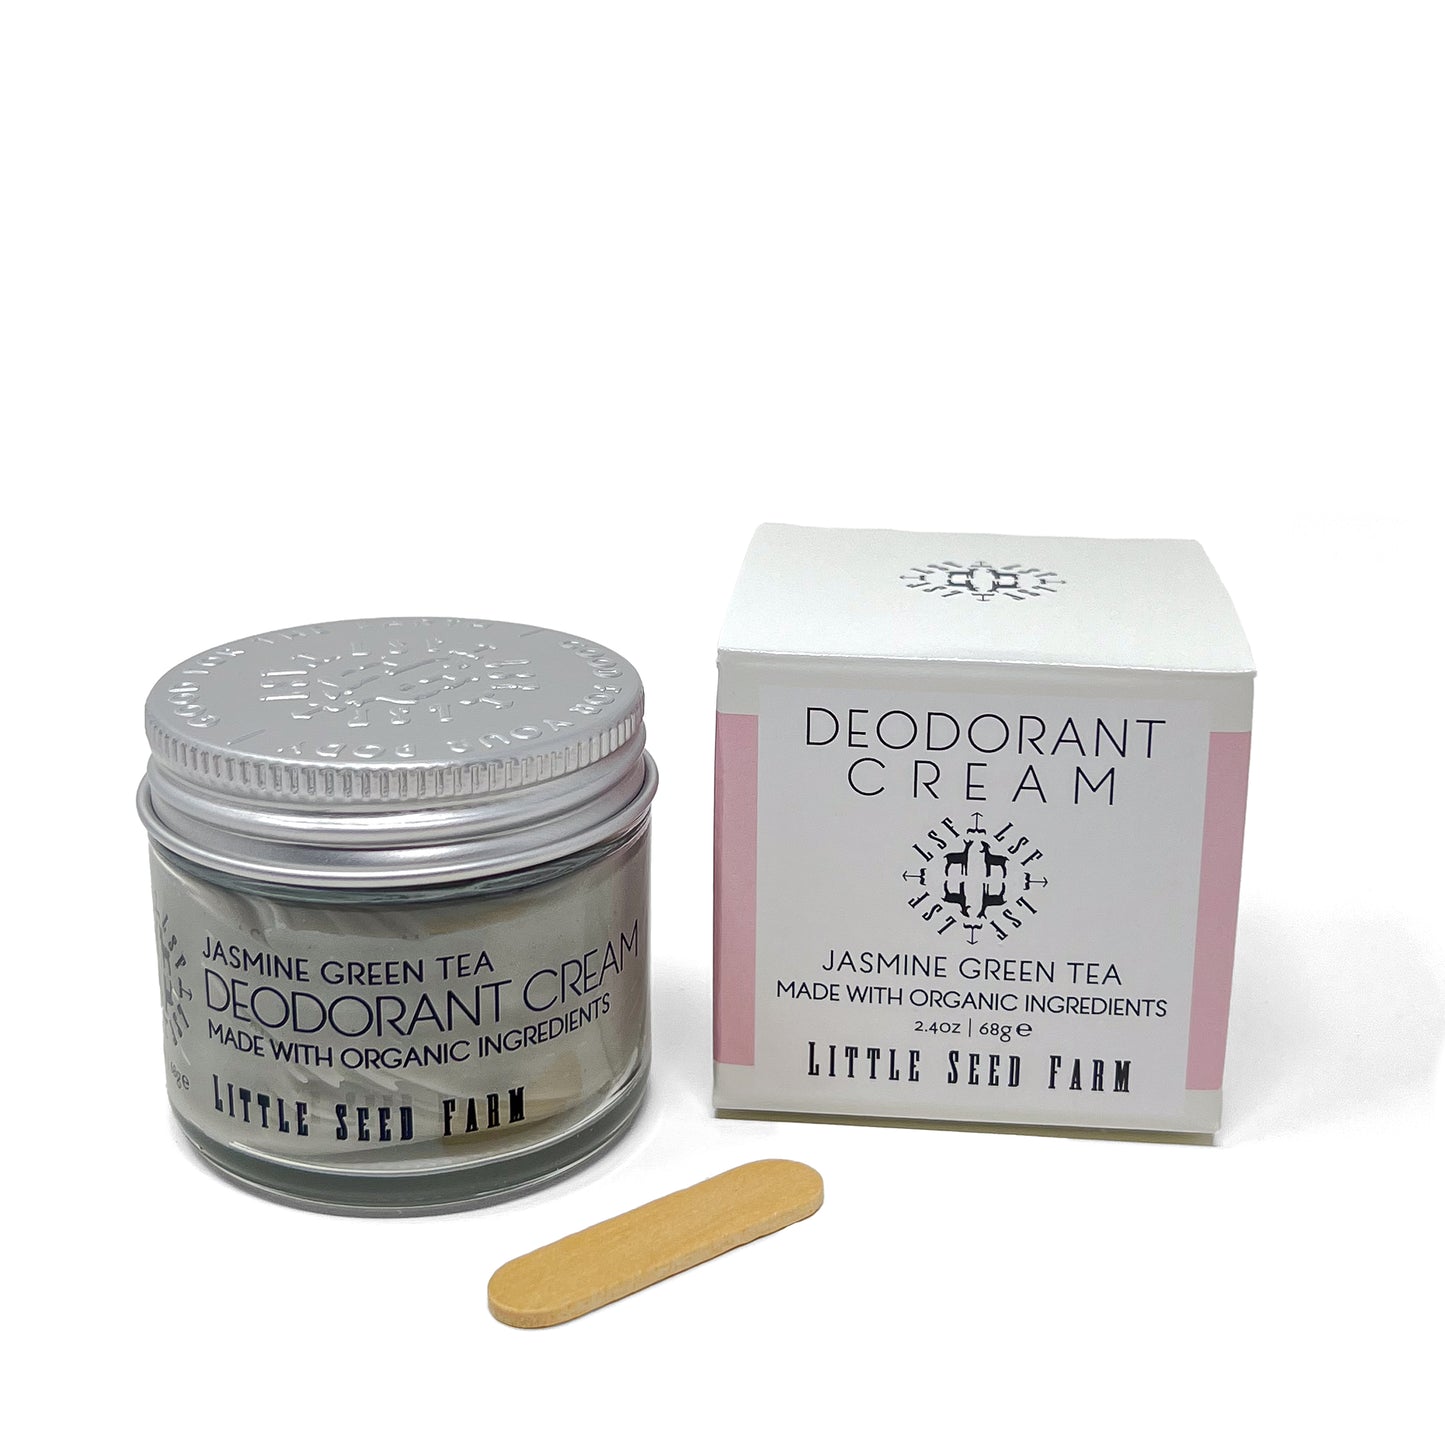 Deodorant Cream - Jasmine Green Tea